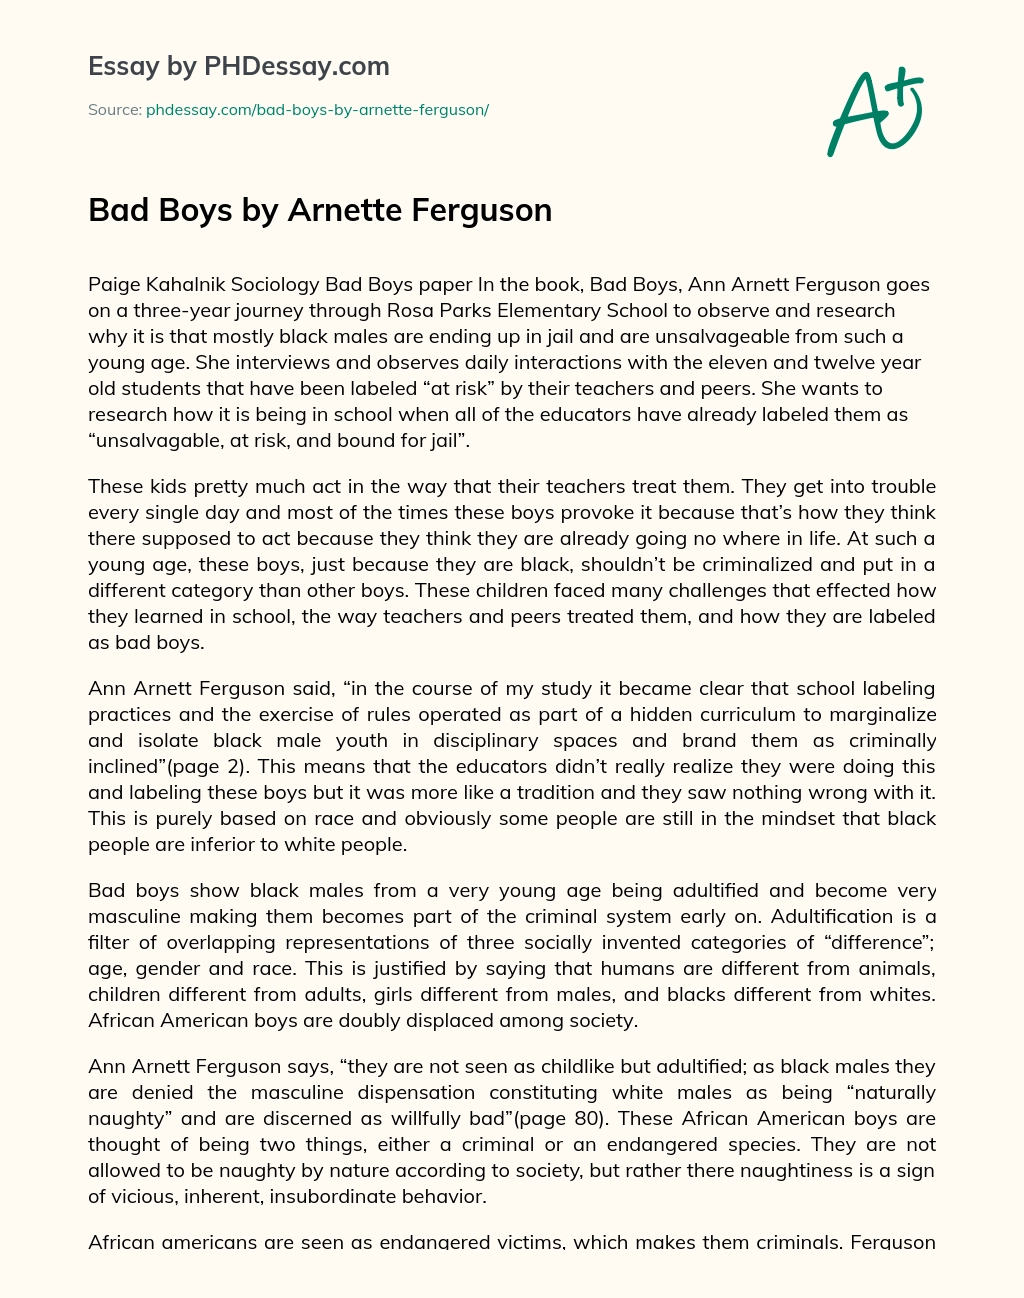 Bad Boys by Arnette Ferguson essay